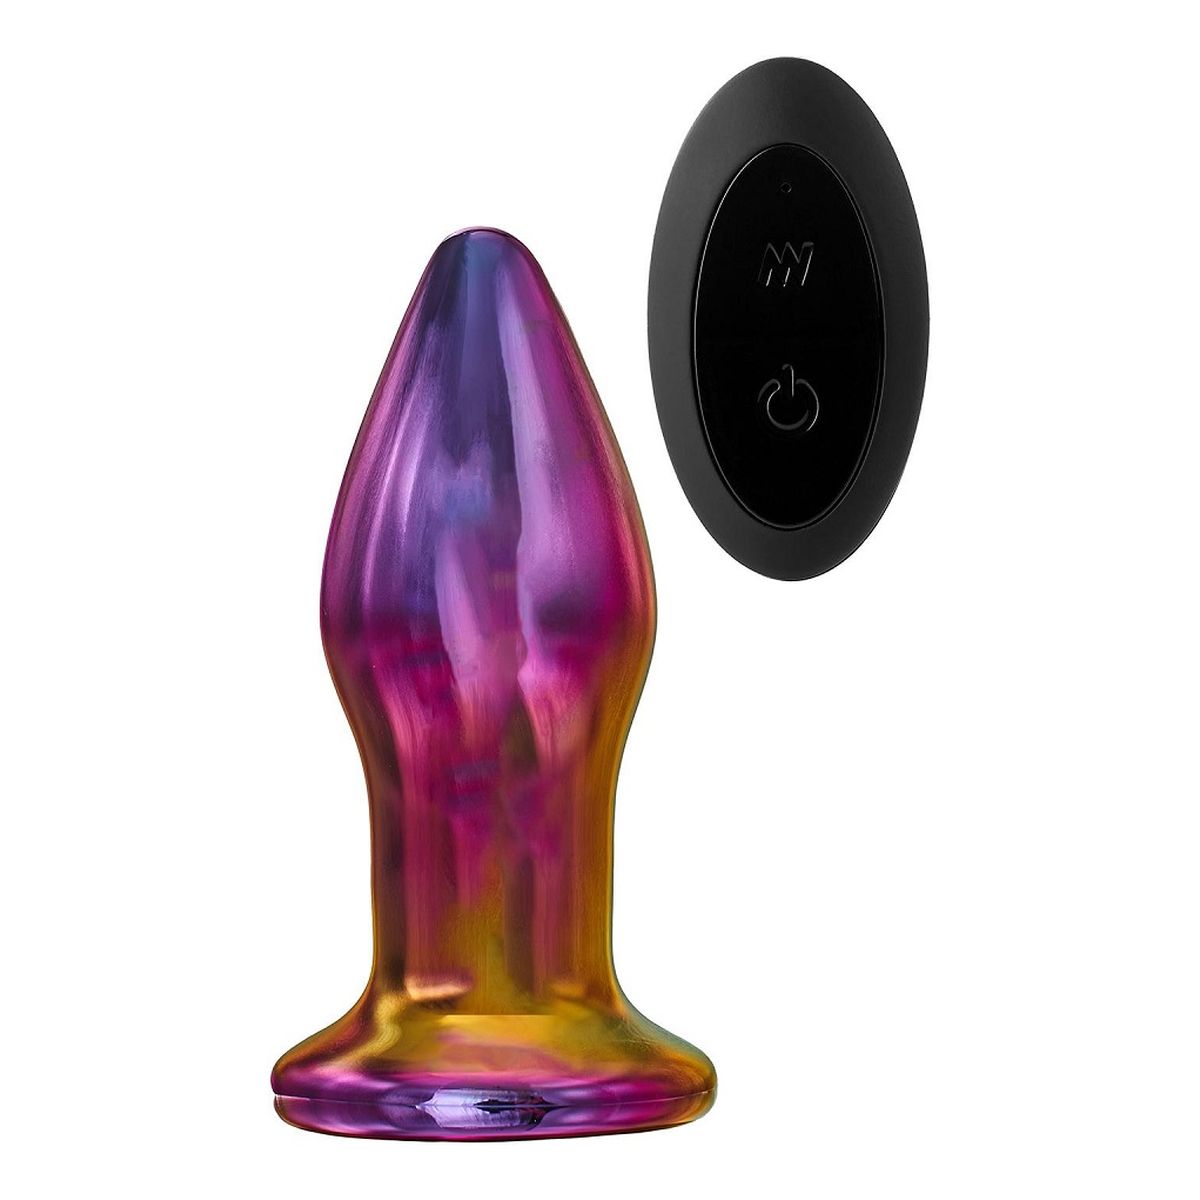 Dream Toys Glamour glass remote vibe plug szklany korek analny